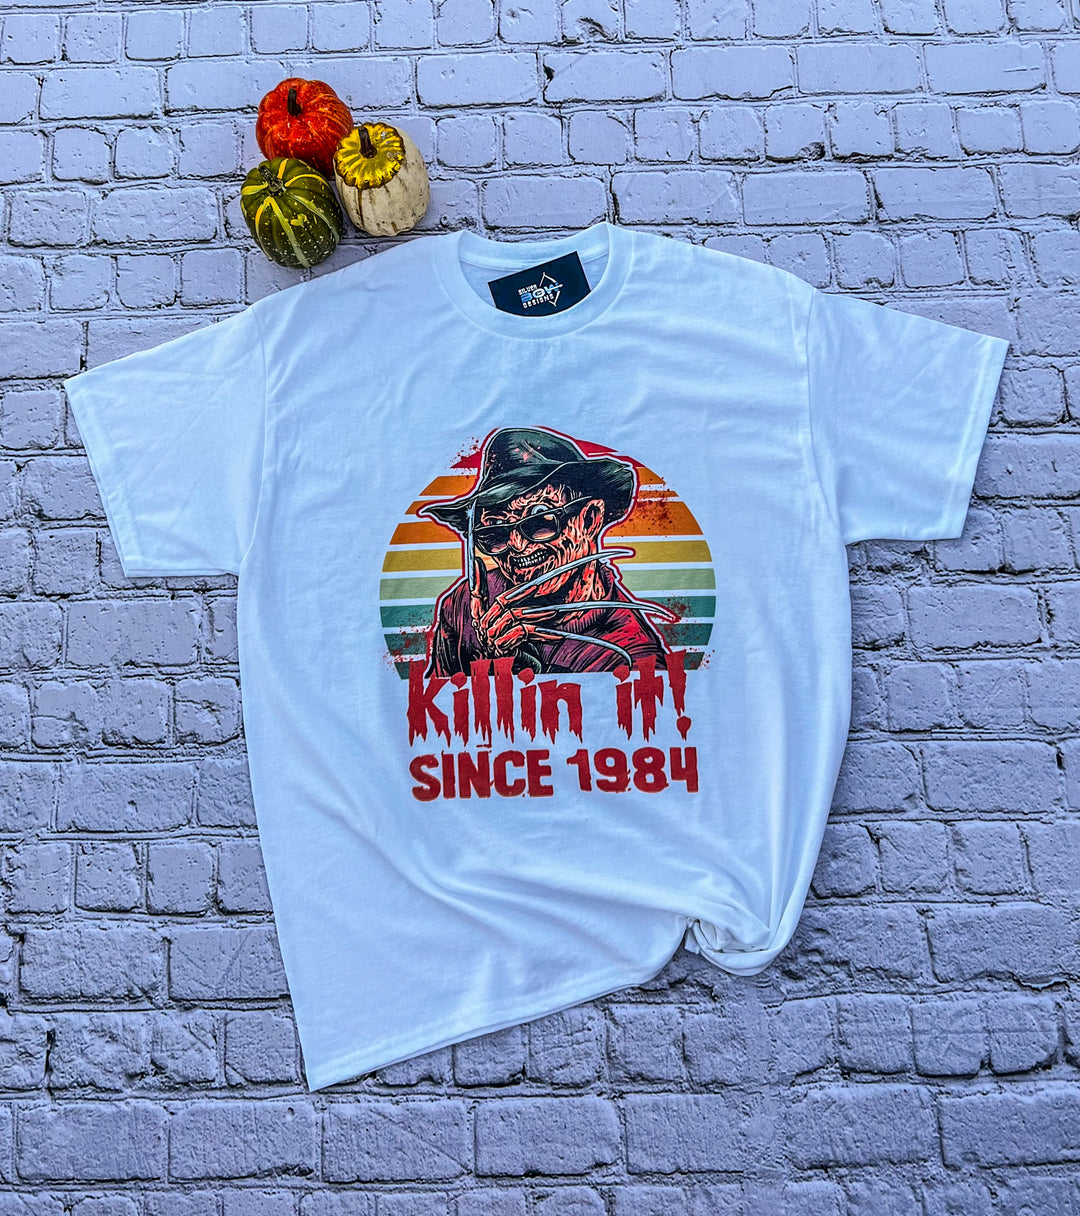 Freddy Krueger Killin' It! T-Shirt